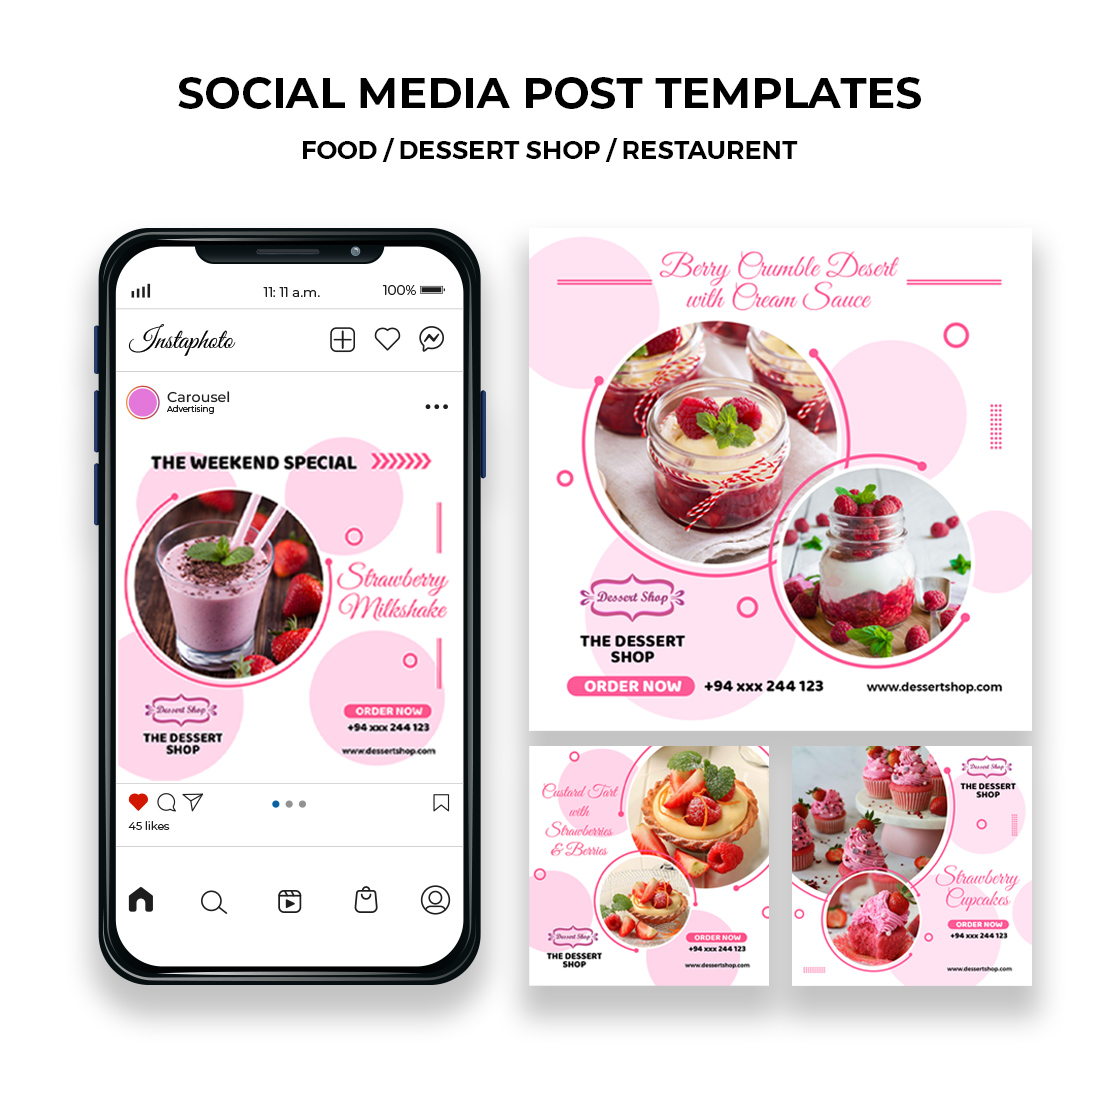 Food / Dessert Shop / Restaurant - Social Media Post Templates preview image.